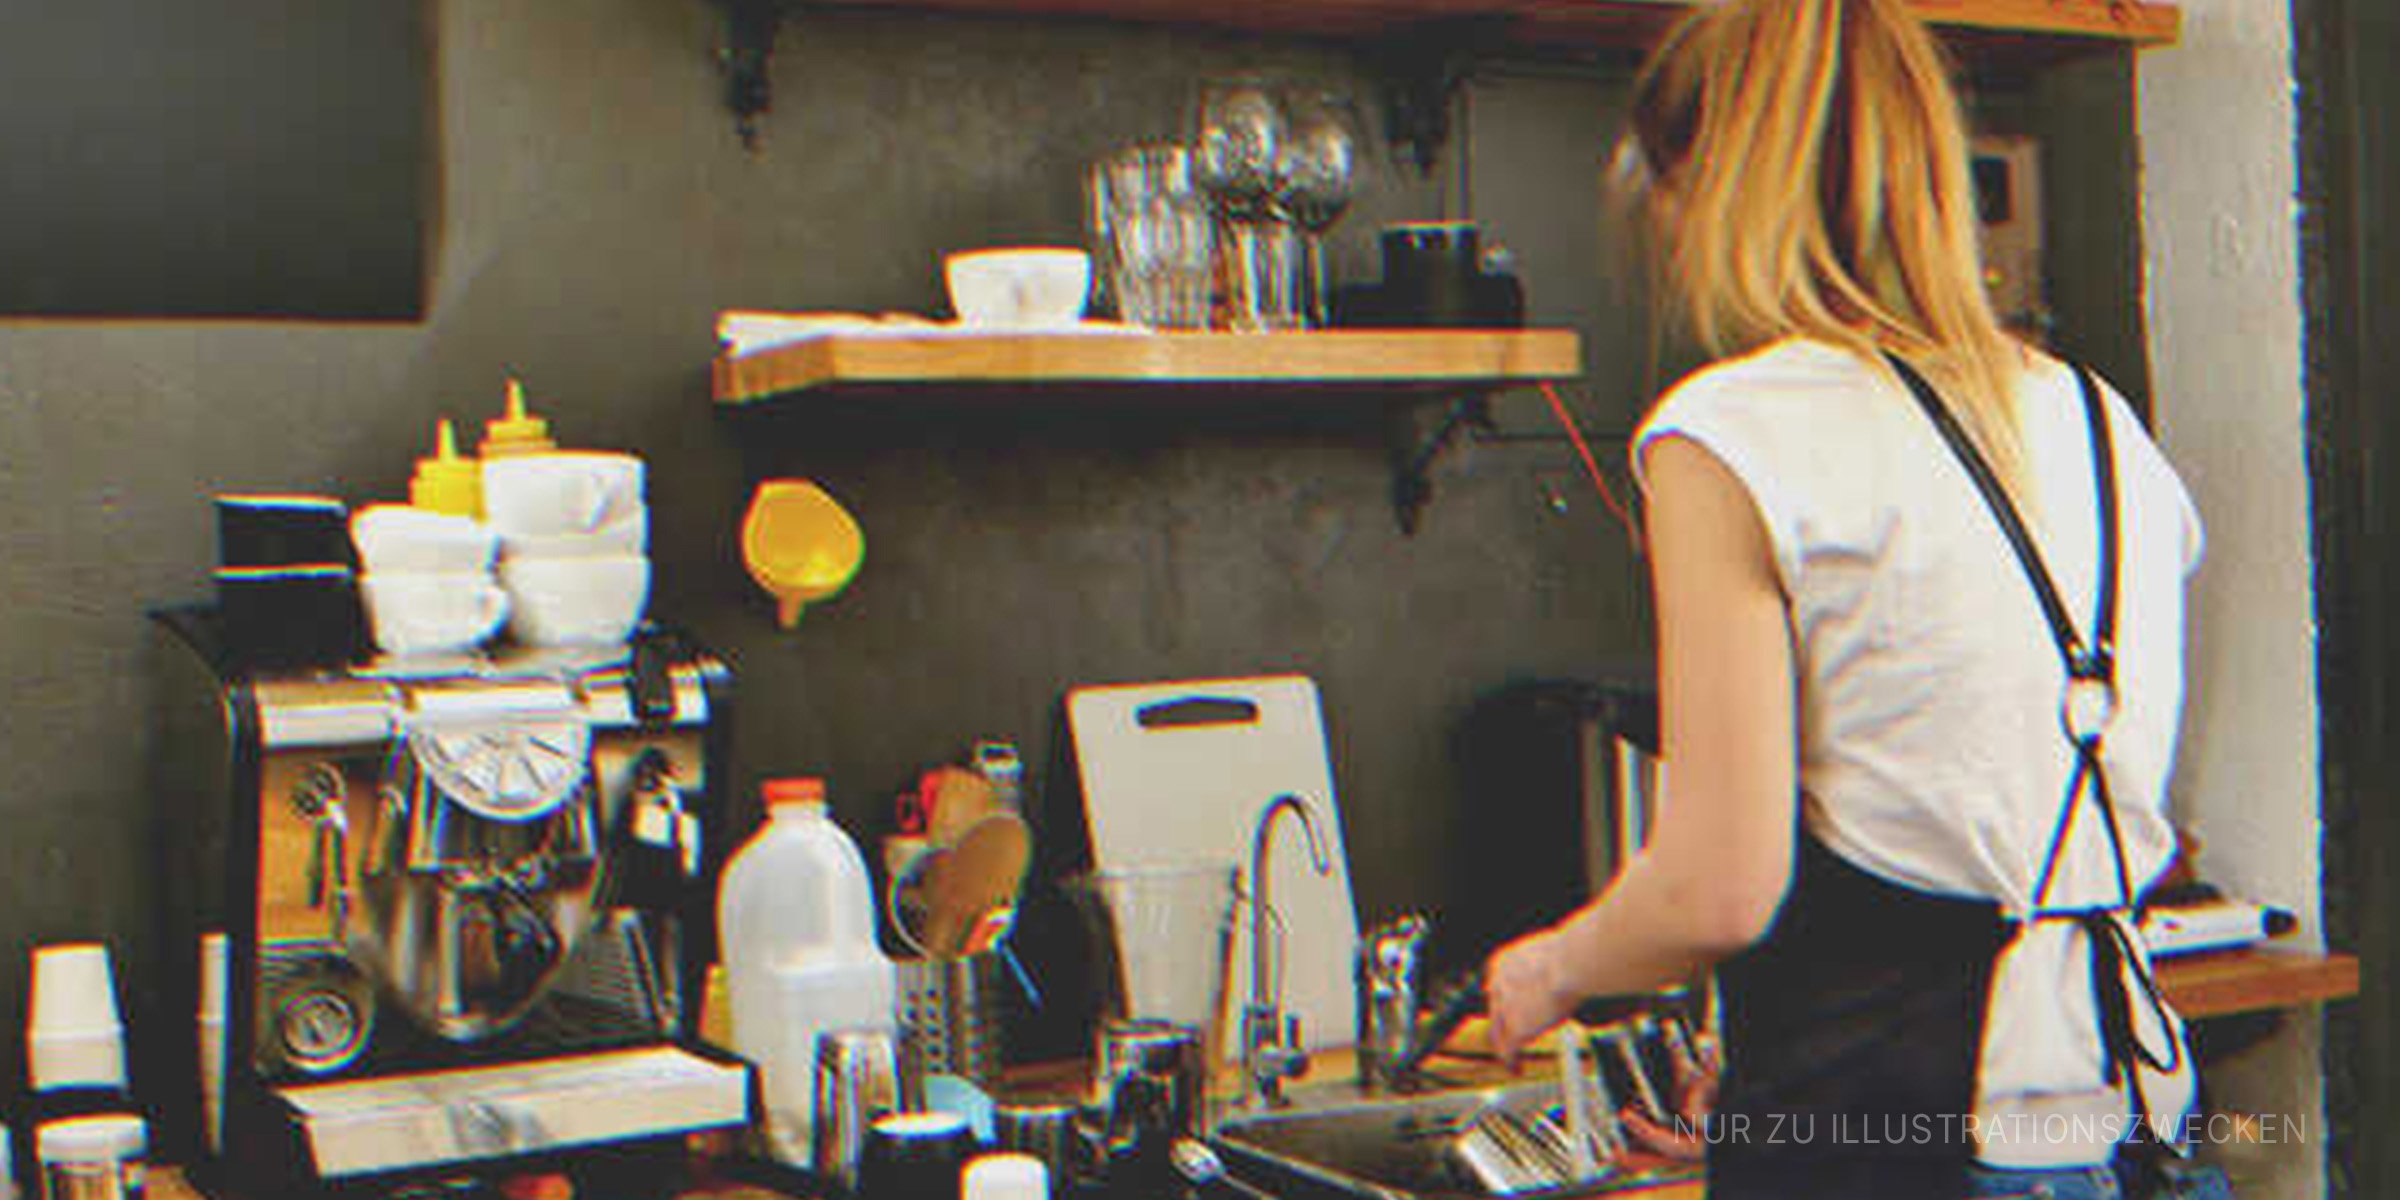 Junge Frau beim Geschirrspülen | Quelle: Shutterstock